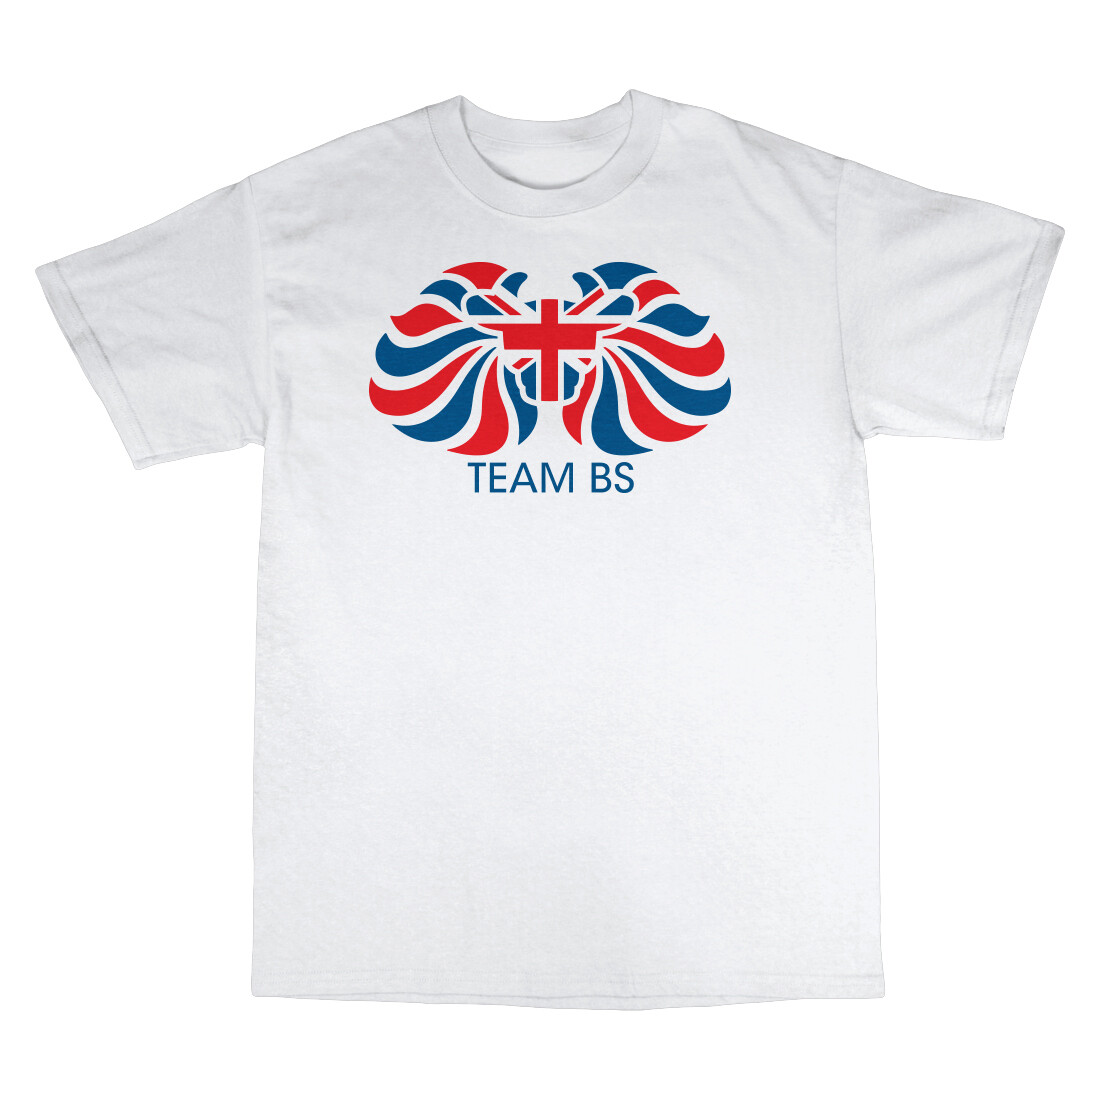 'Team BS' Clothing